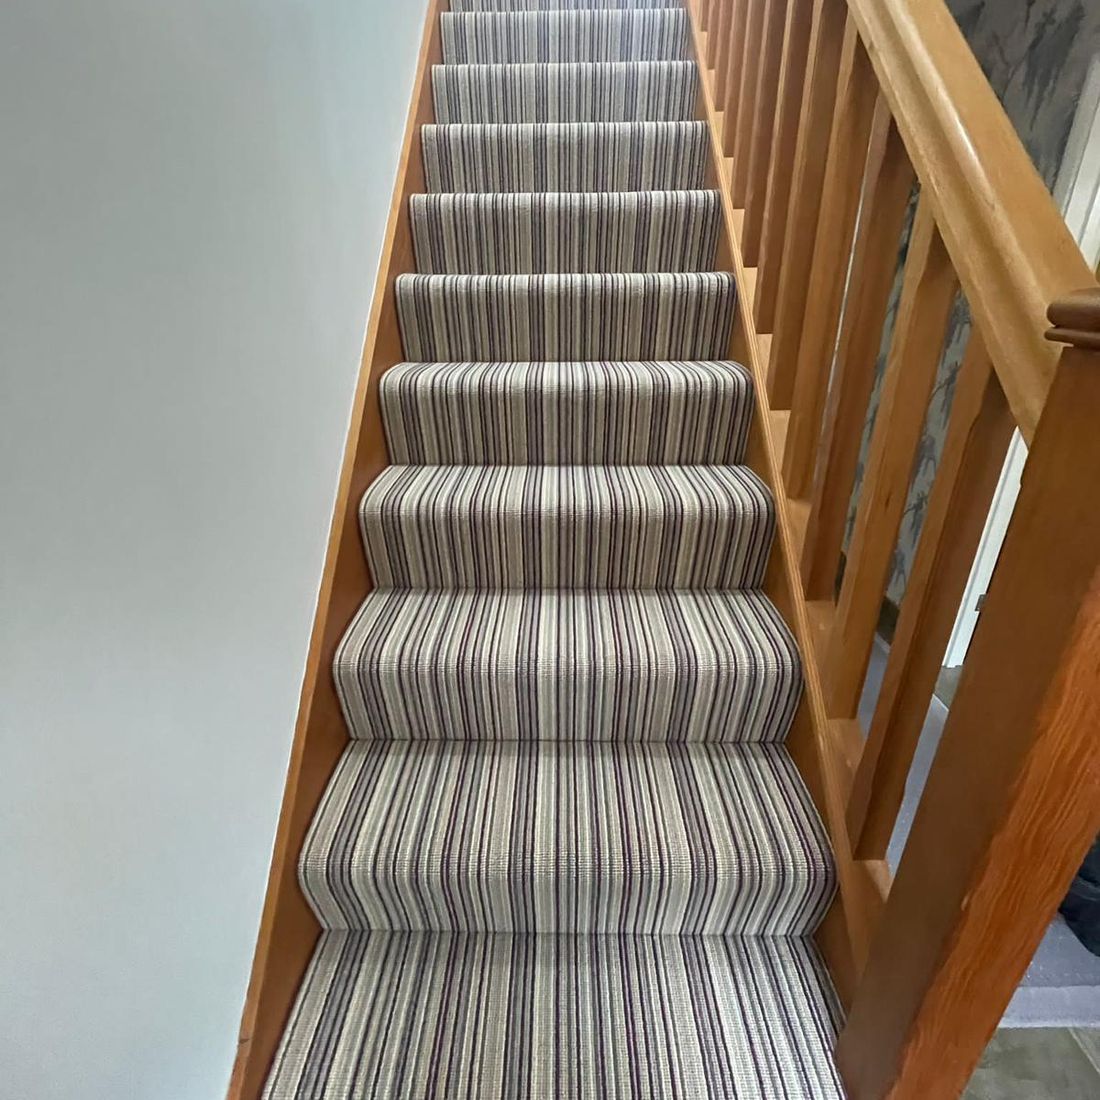 stair carpet